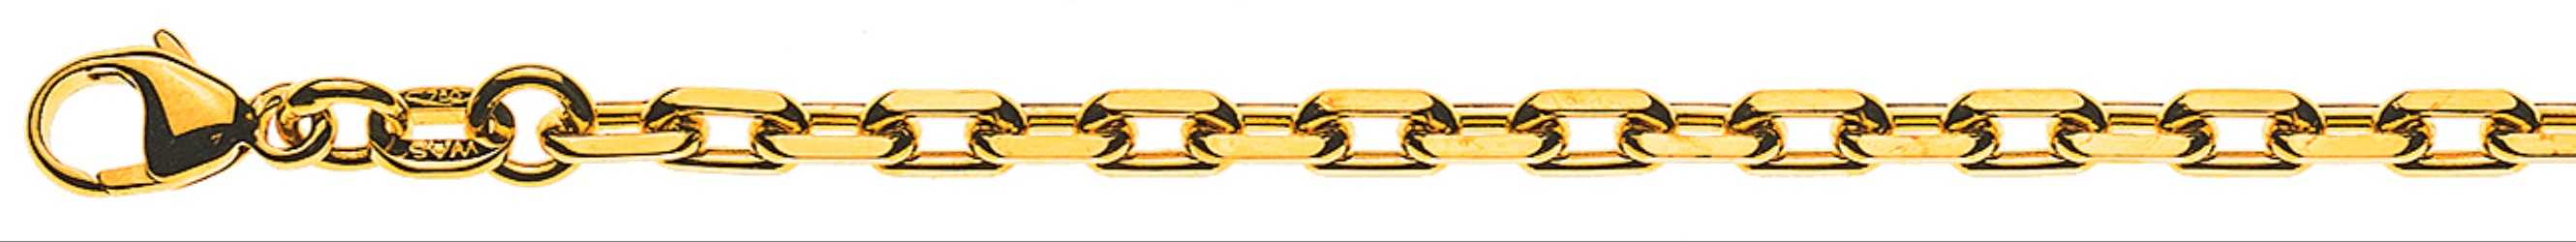 AURONOS Prestige Bracelet Anchor 18K Yellow Gold 24cm 2.9mm